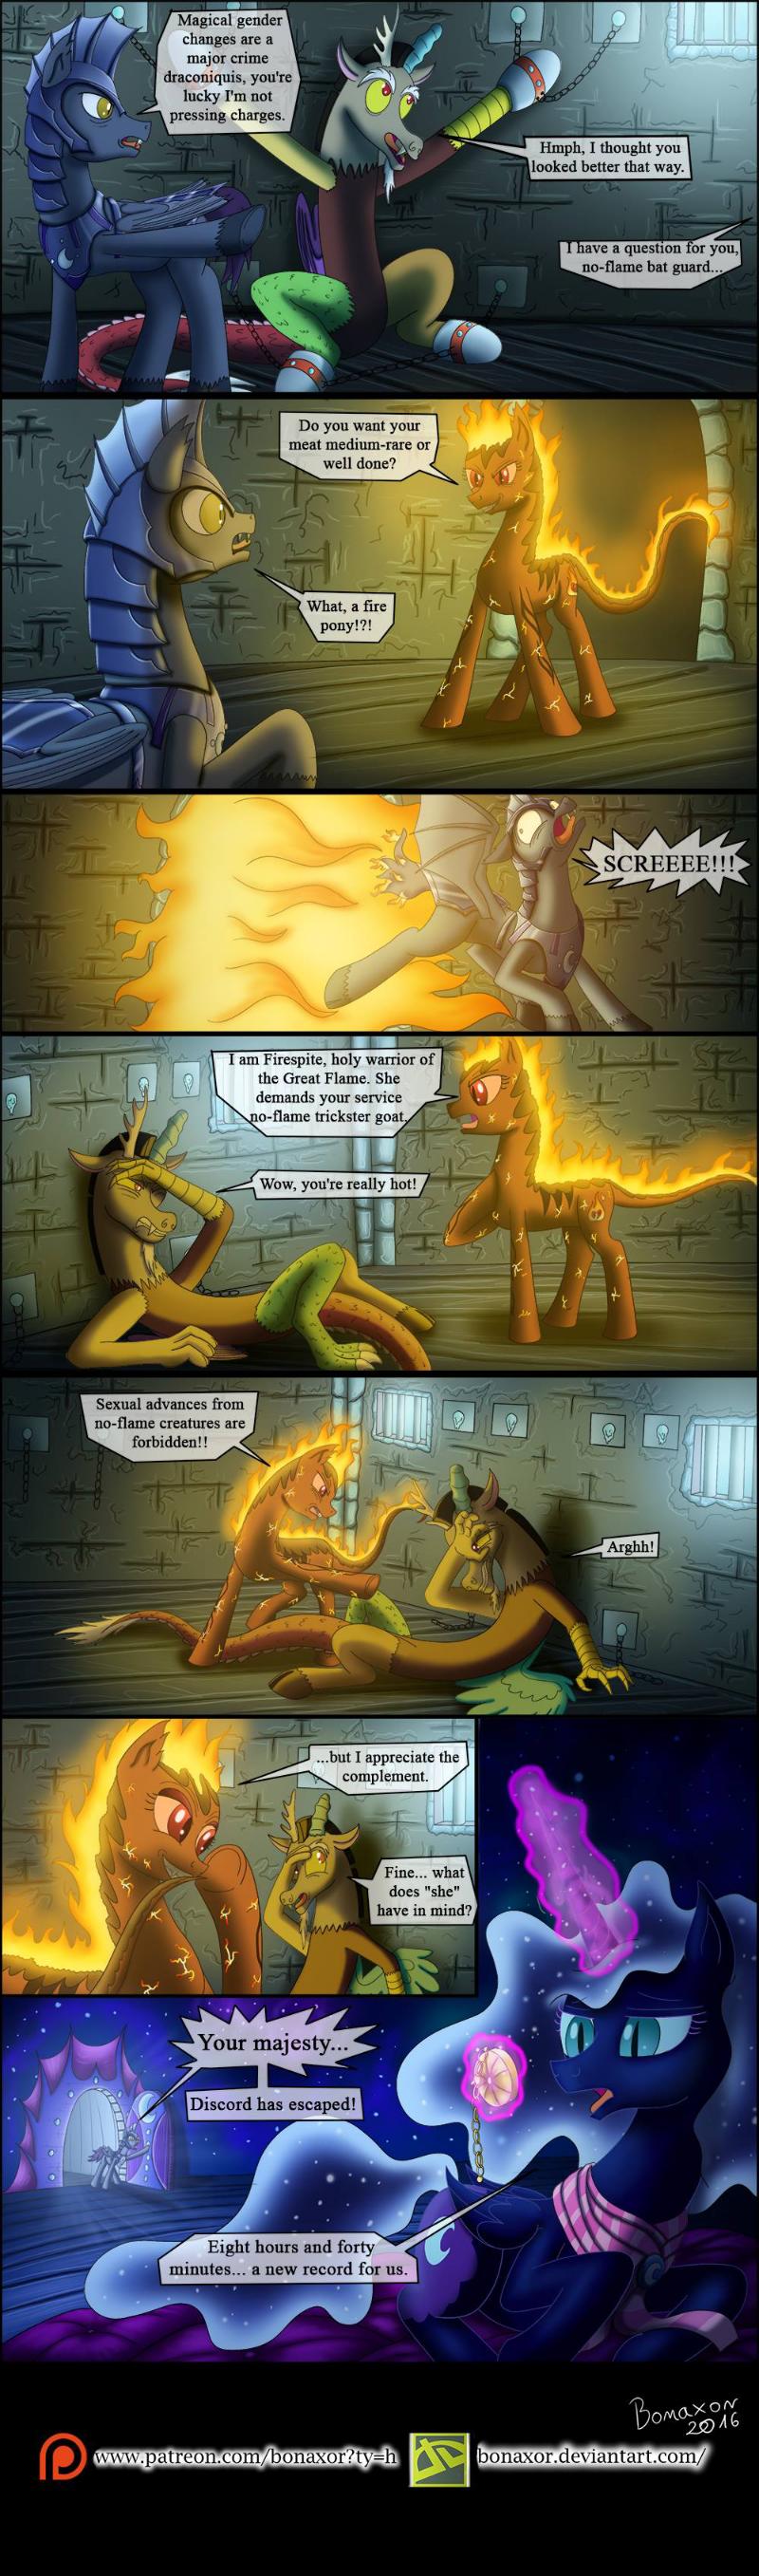 Page 12: Using the Fire Escape